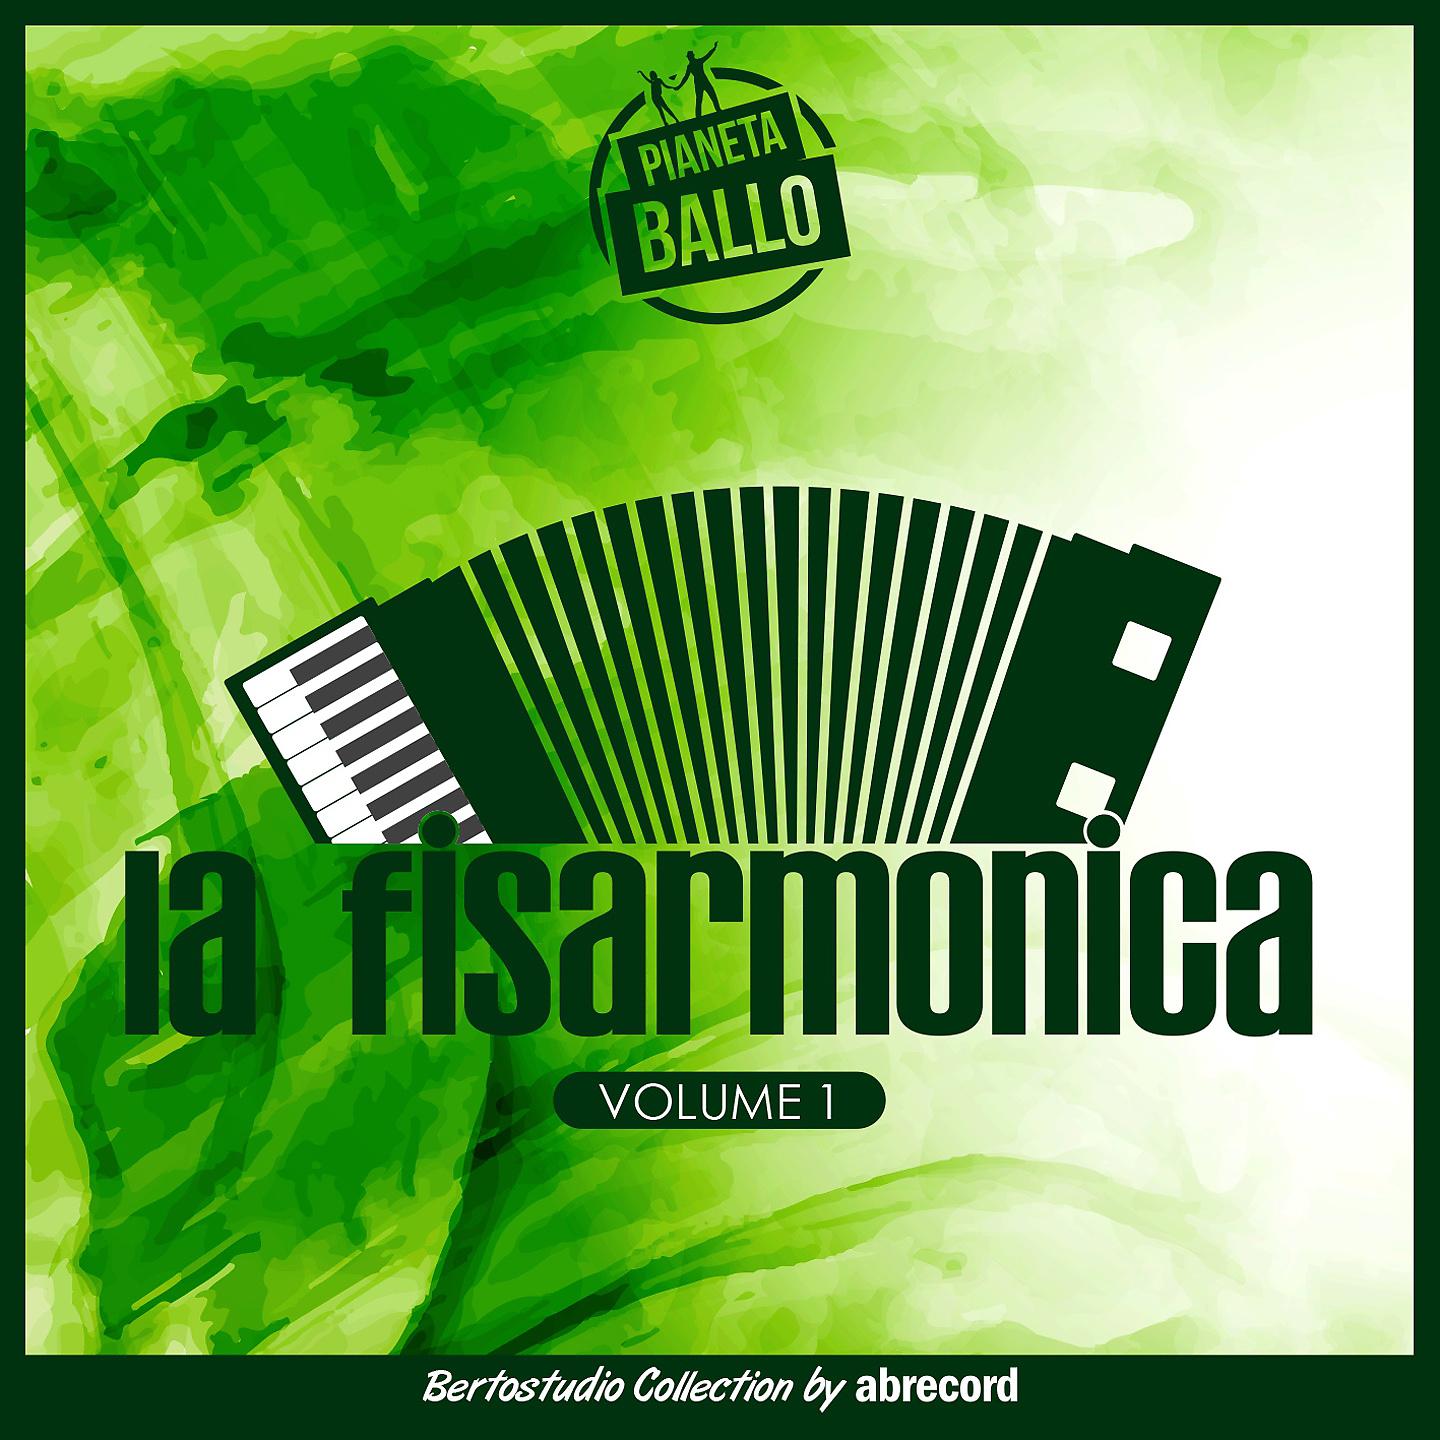 Постер альбома Pianeta Ballo Vol.1 "La fisarmonica"